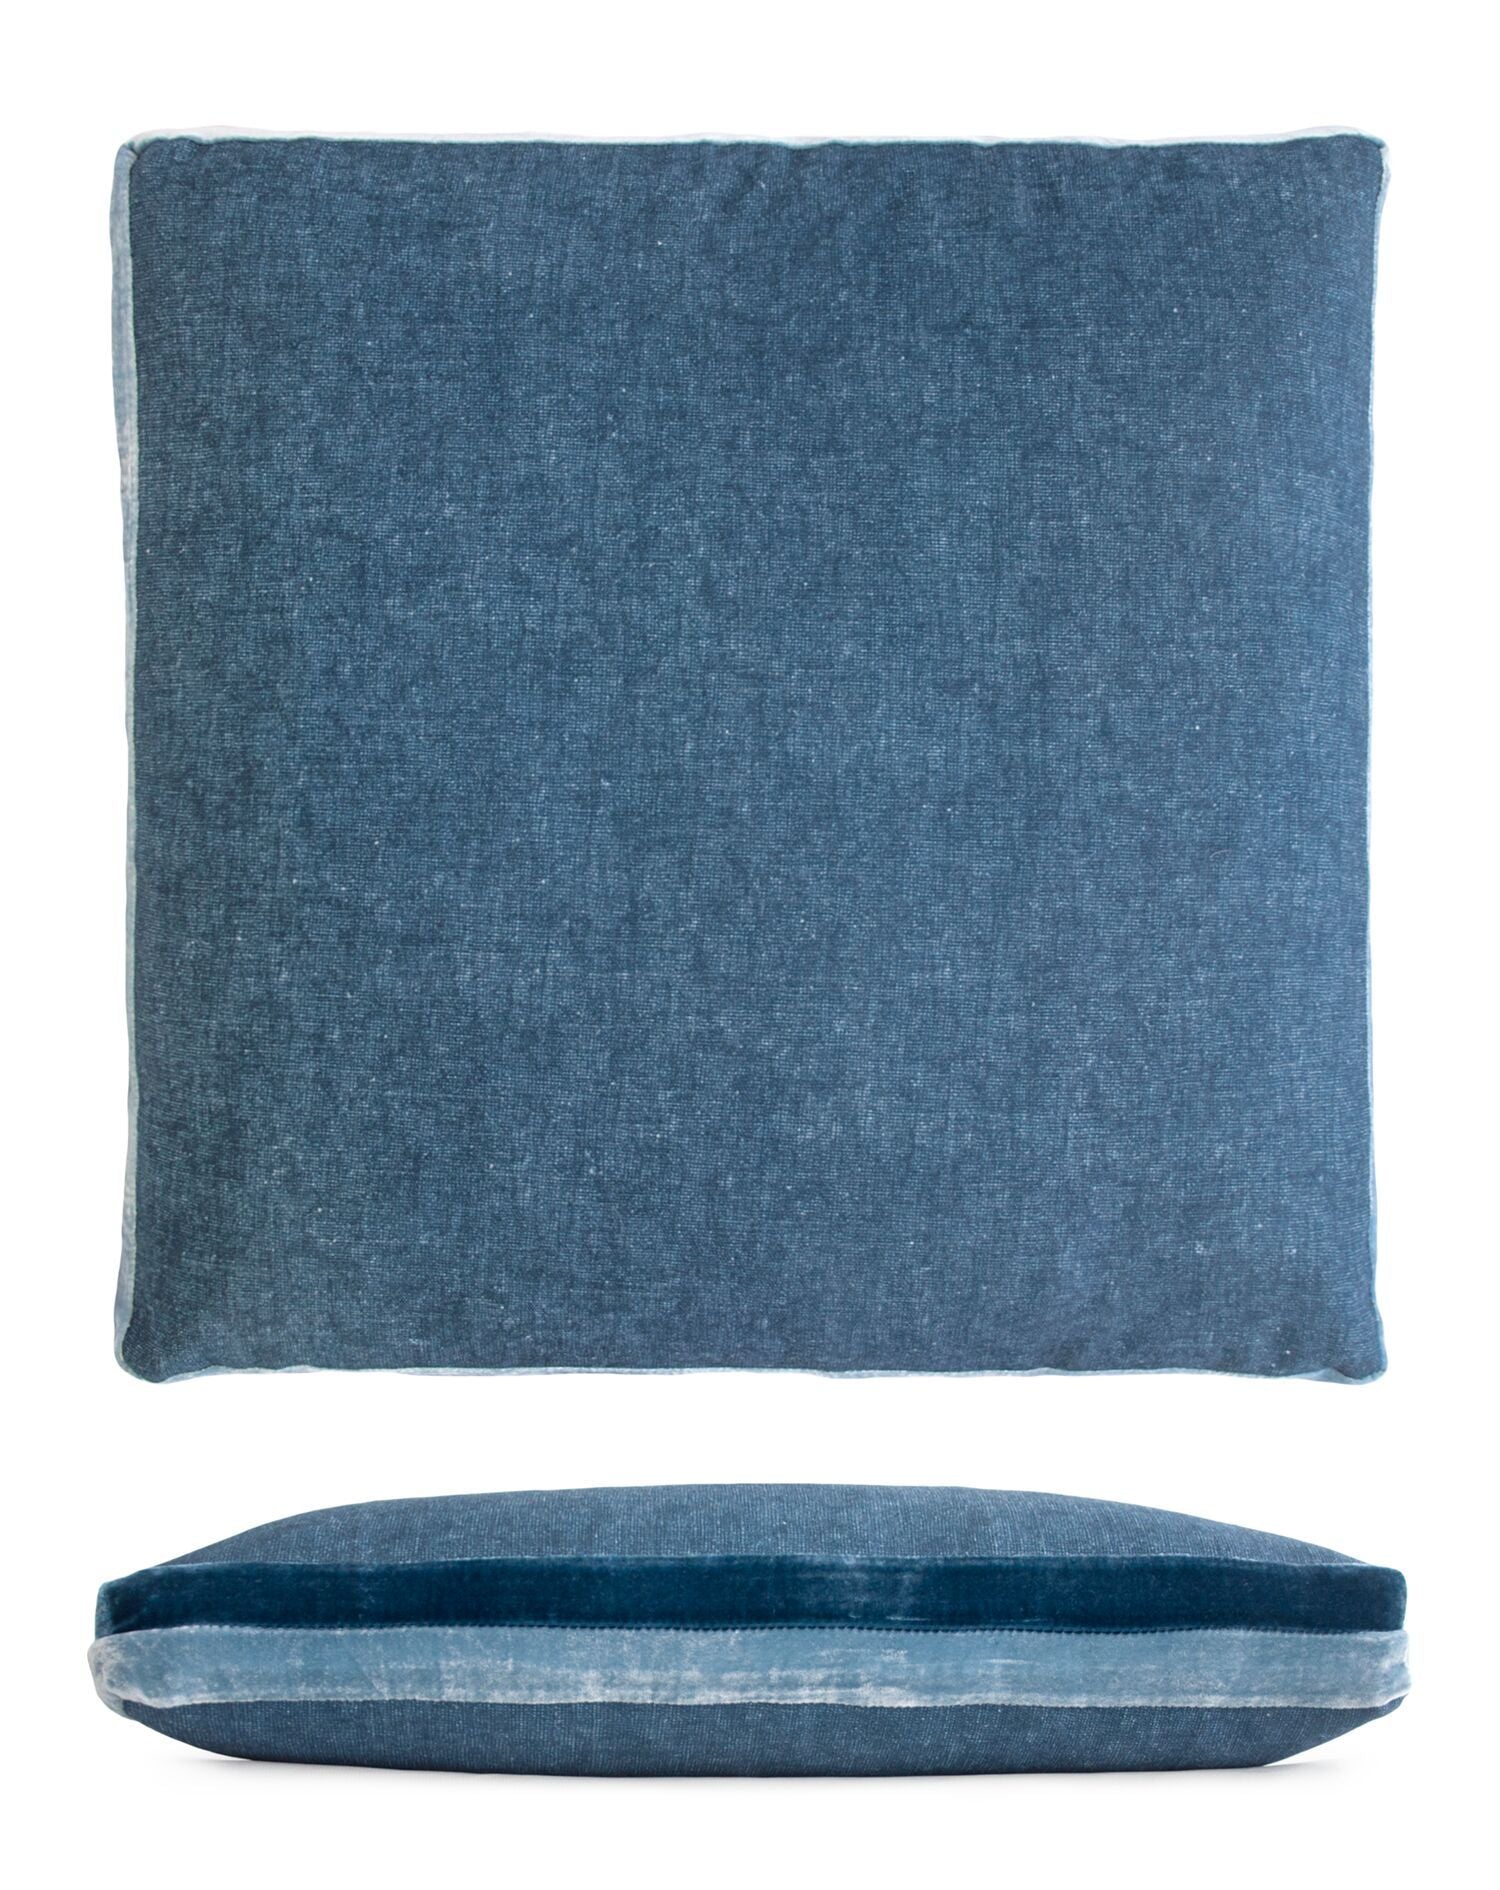 Denim Double Tuxedo Pillow by Kevin O'Brien Studio | Fig Linens